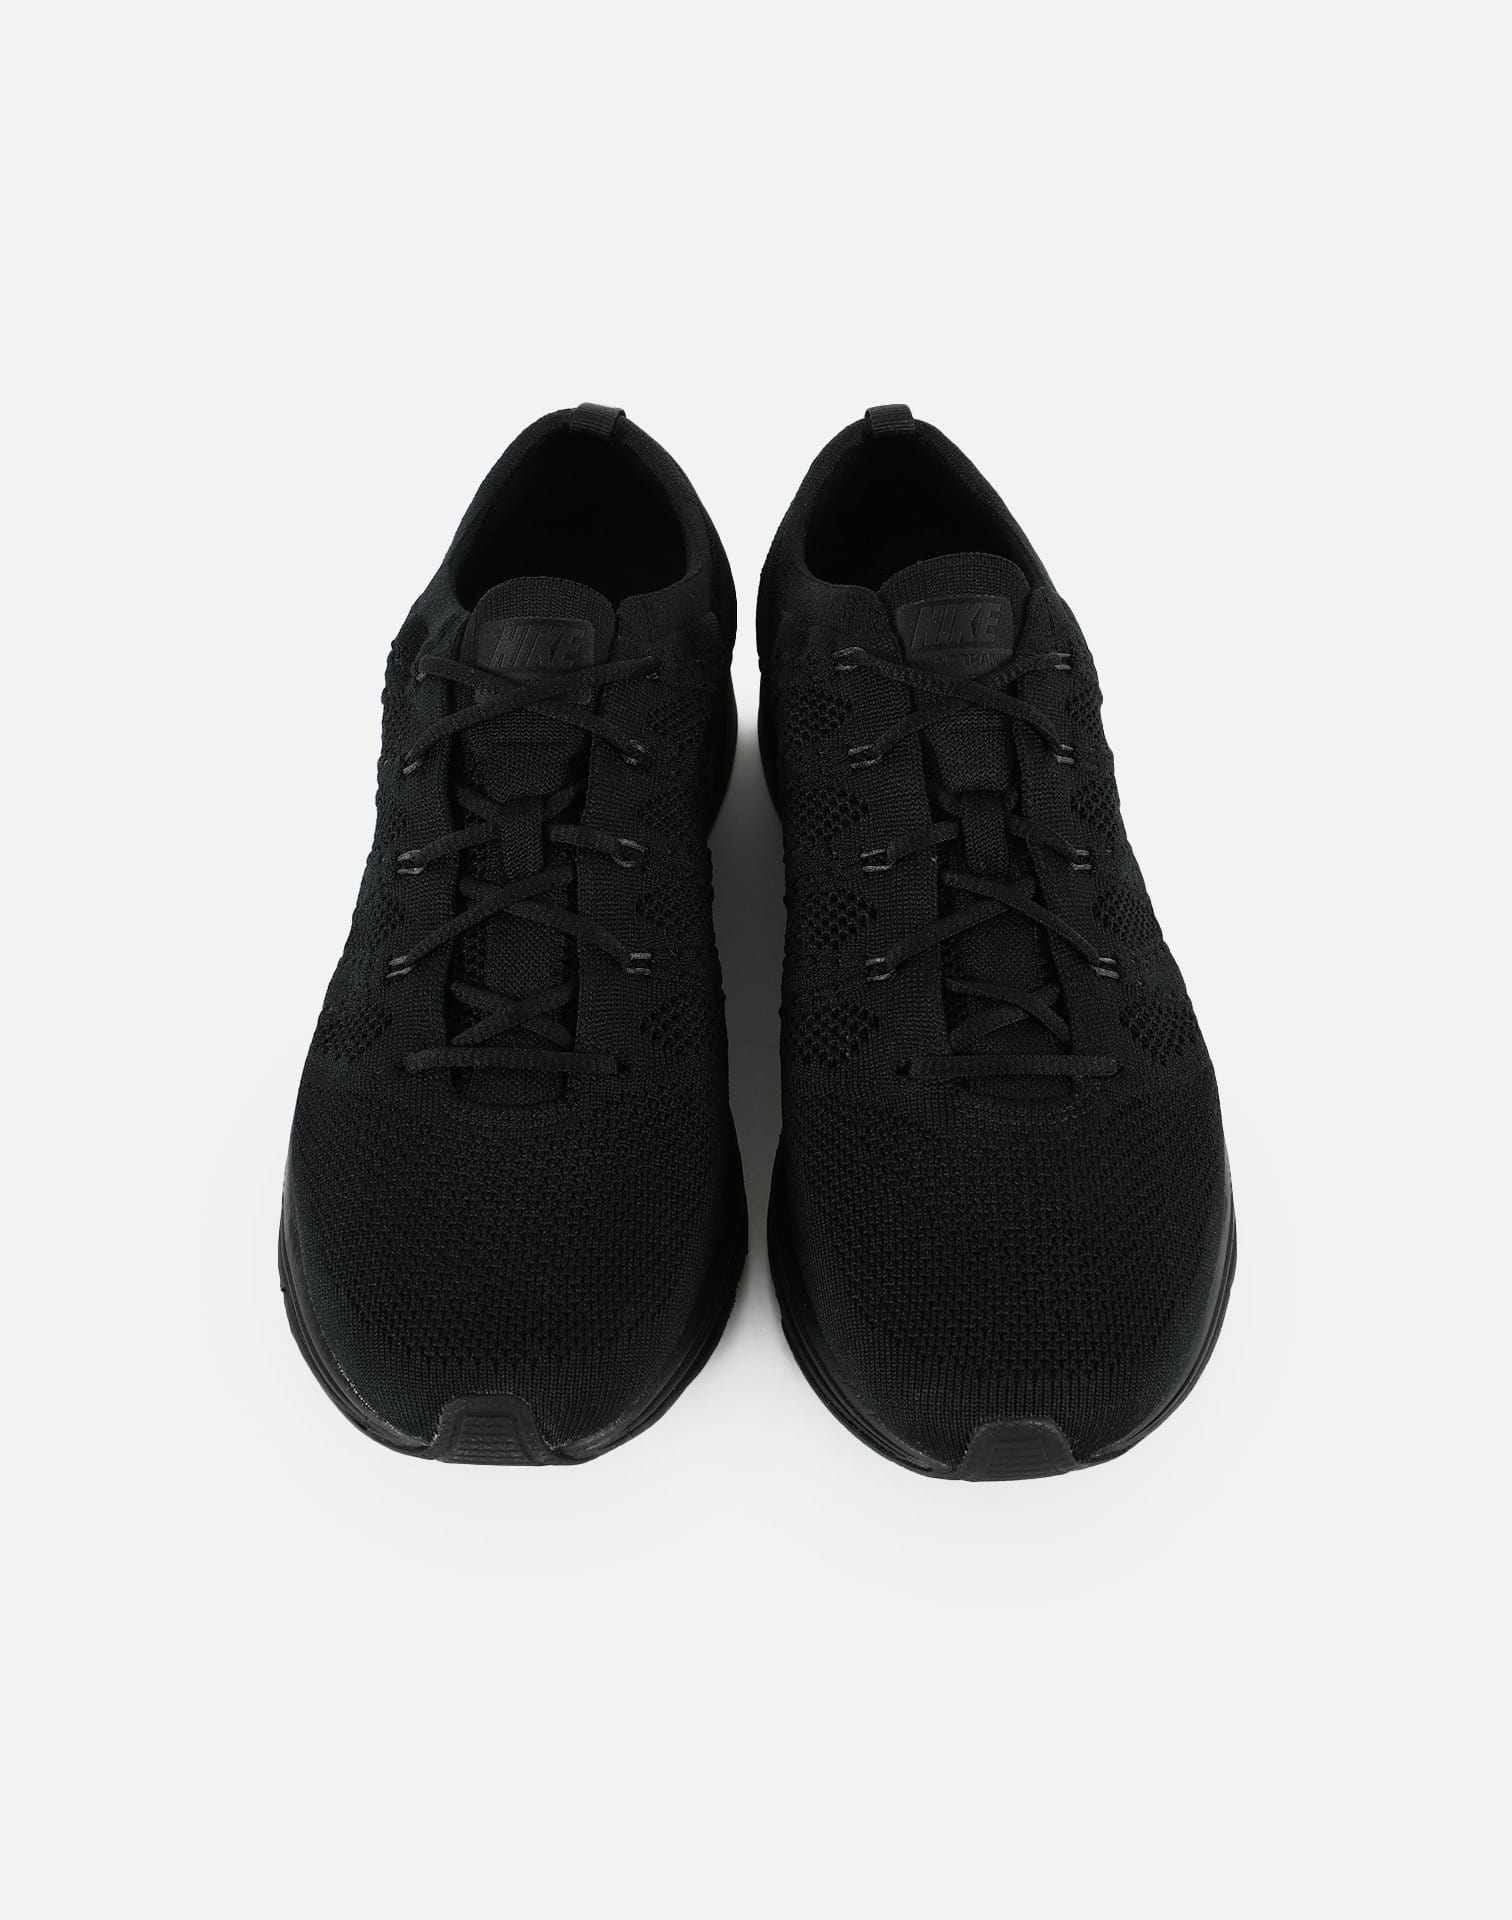 Nike Men's Flyknit Trainer QS 'Black Anthracite'